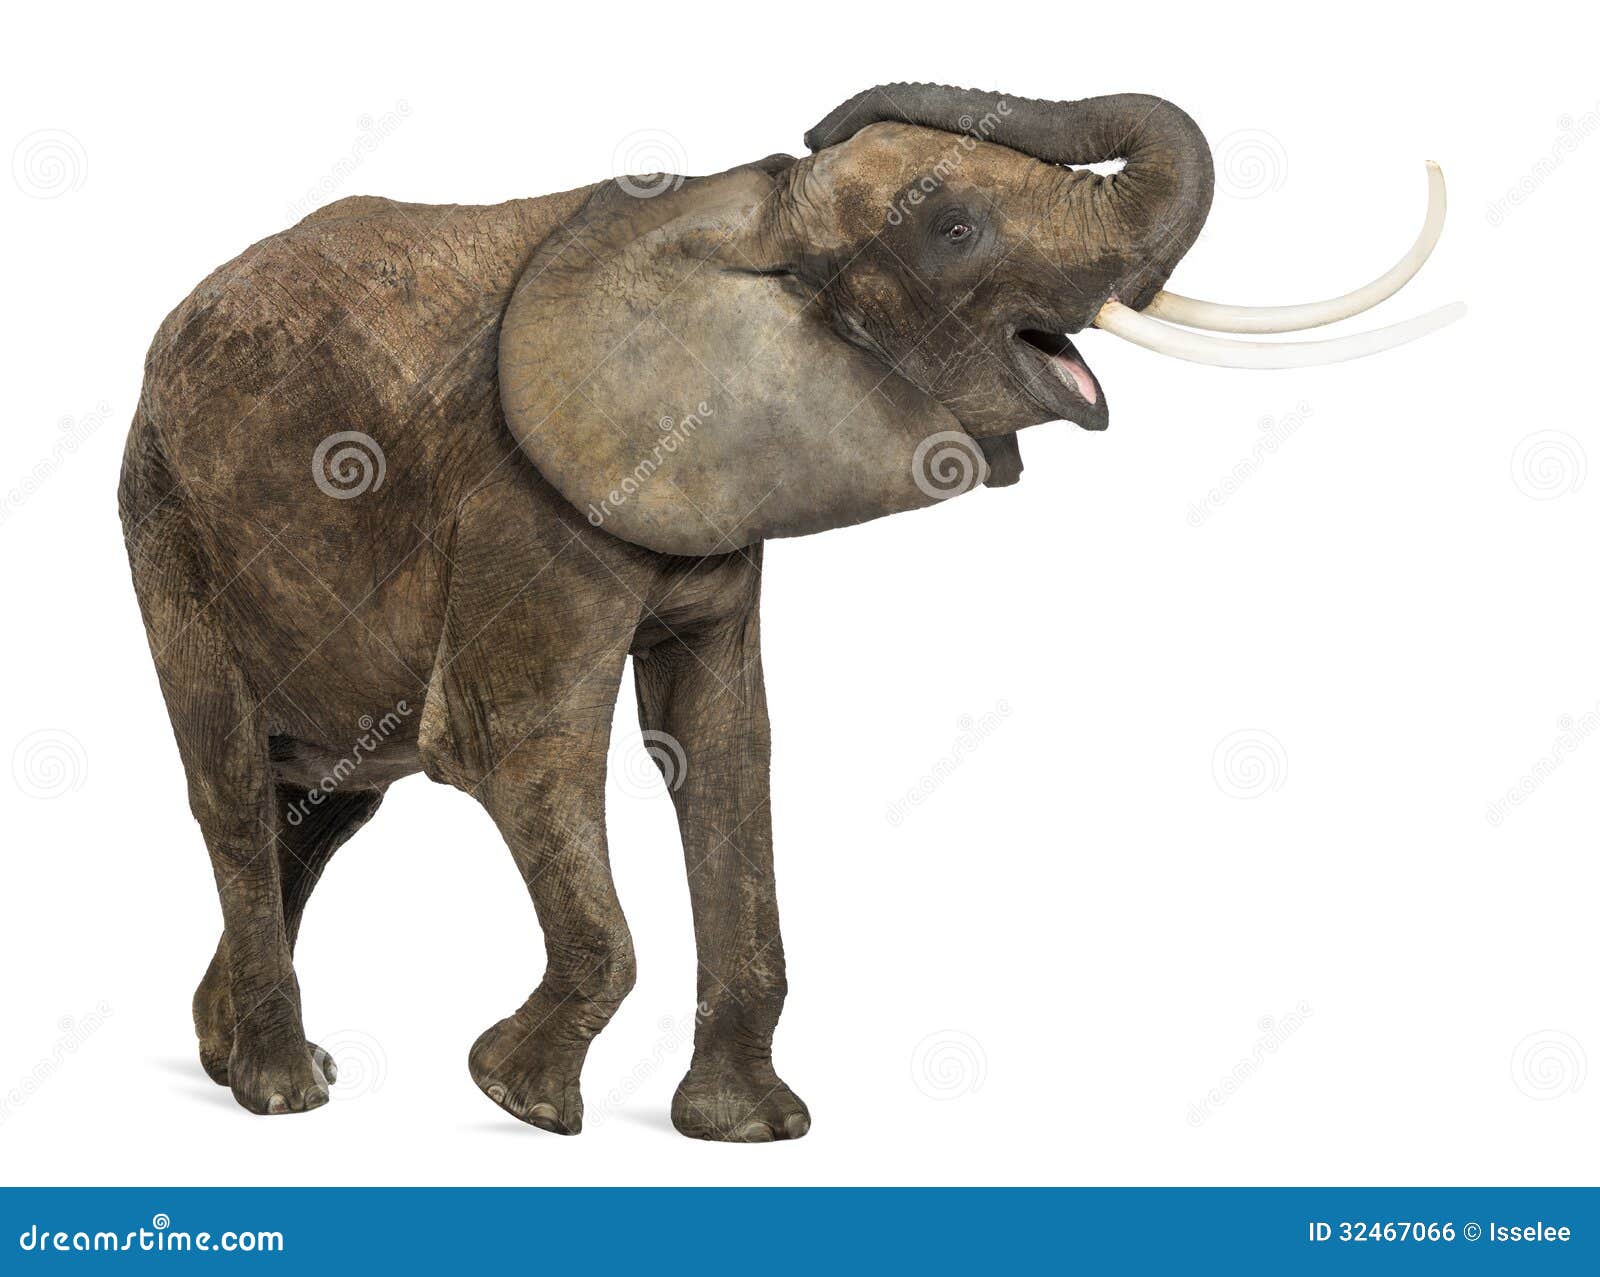 elephant trumpeting clipart - photo #12